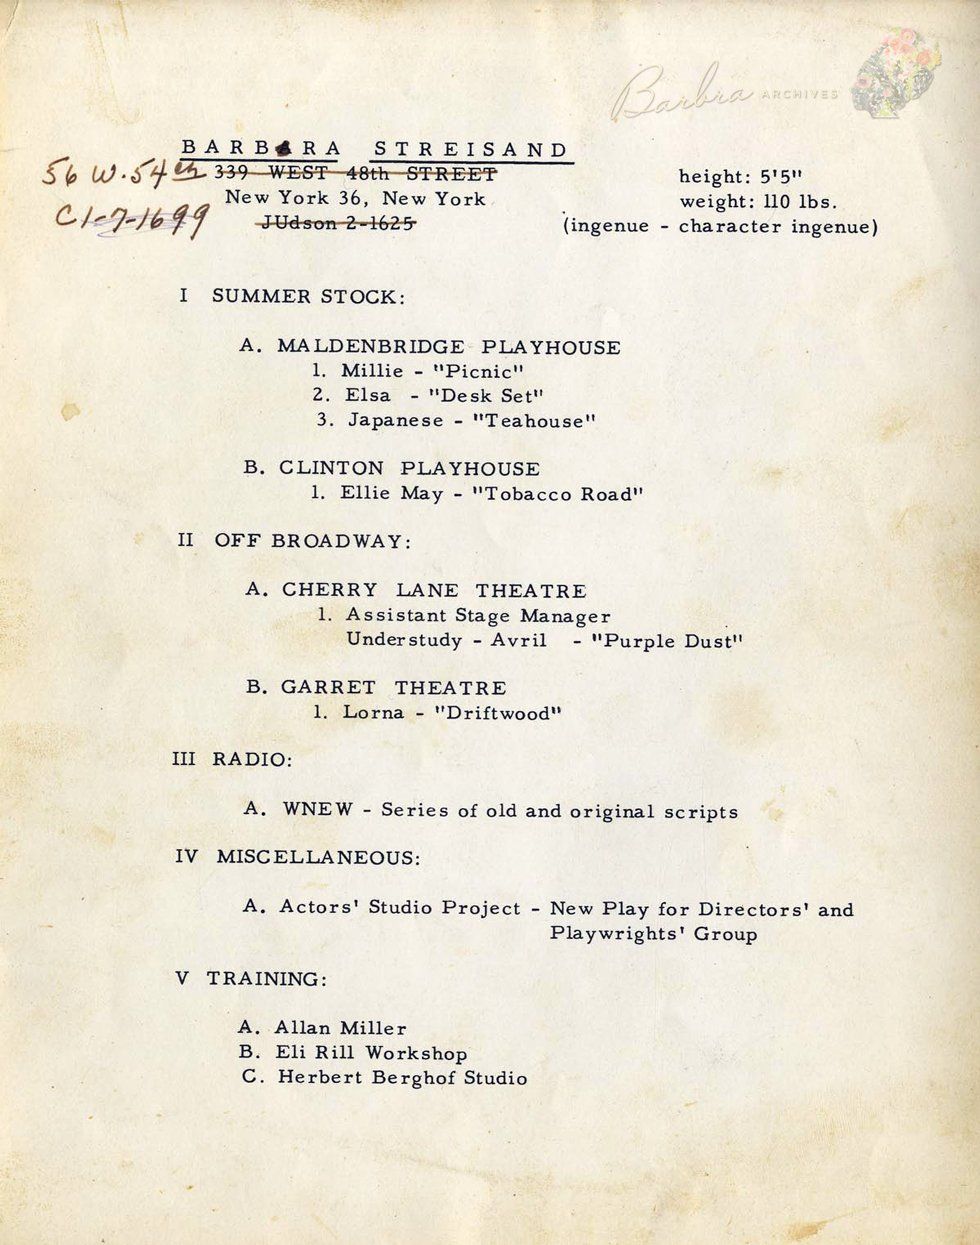 Barbra Streisand's theatrical resume, circa 1958